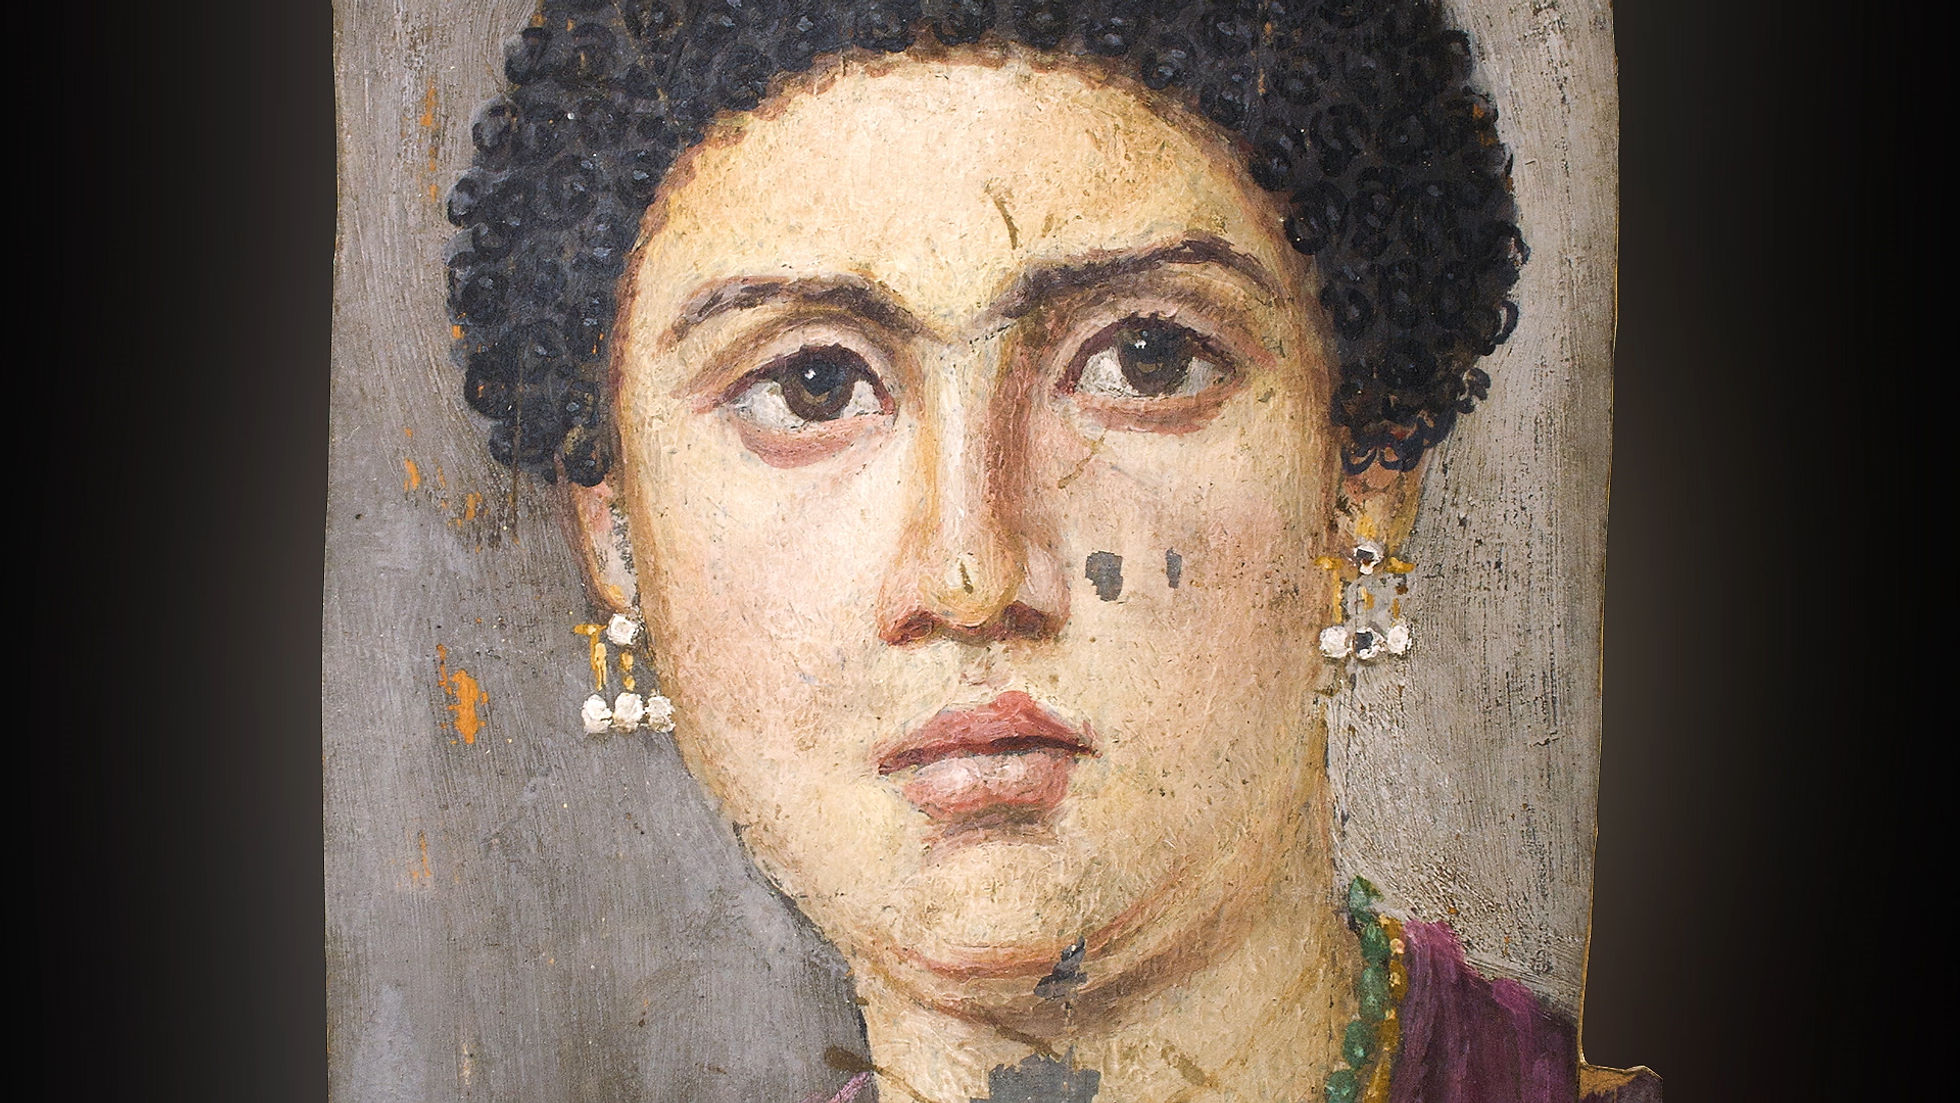 Roman Period Mummy Portraits